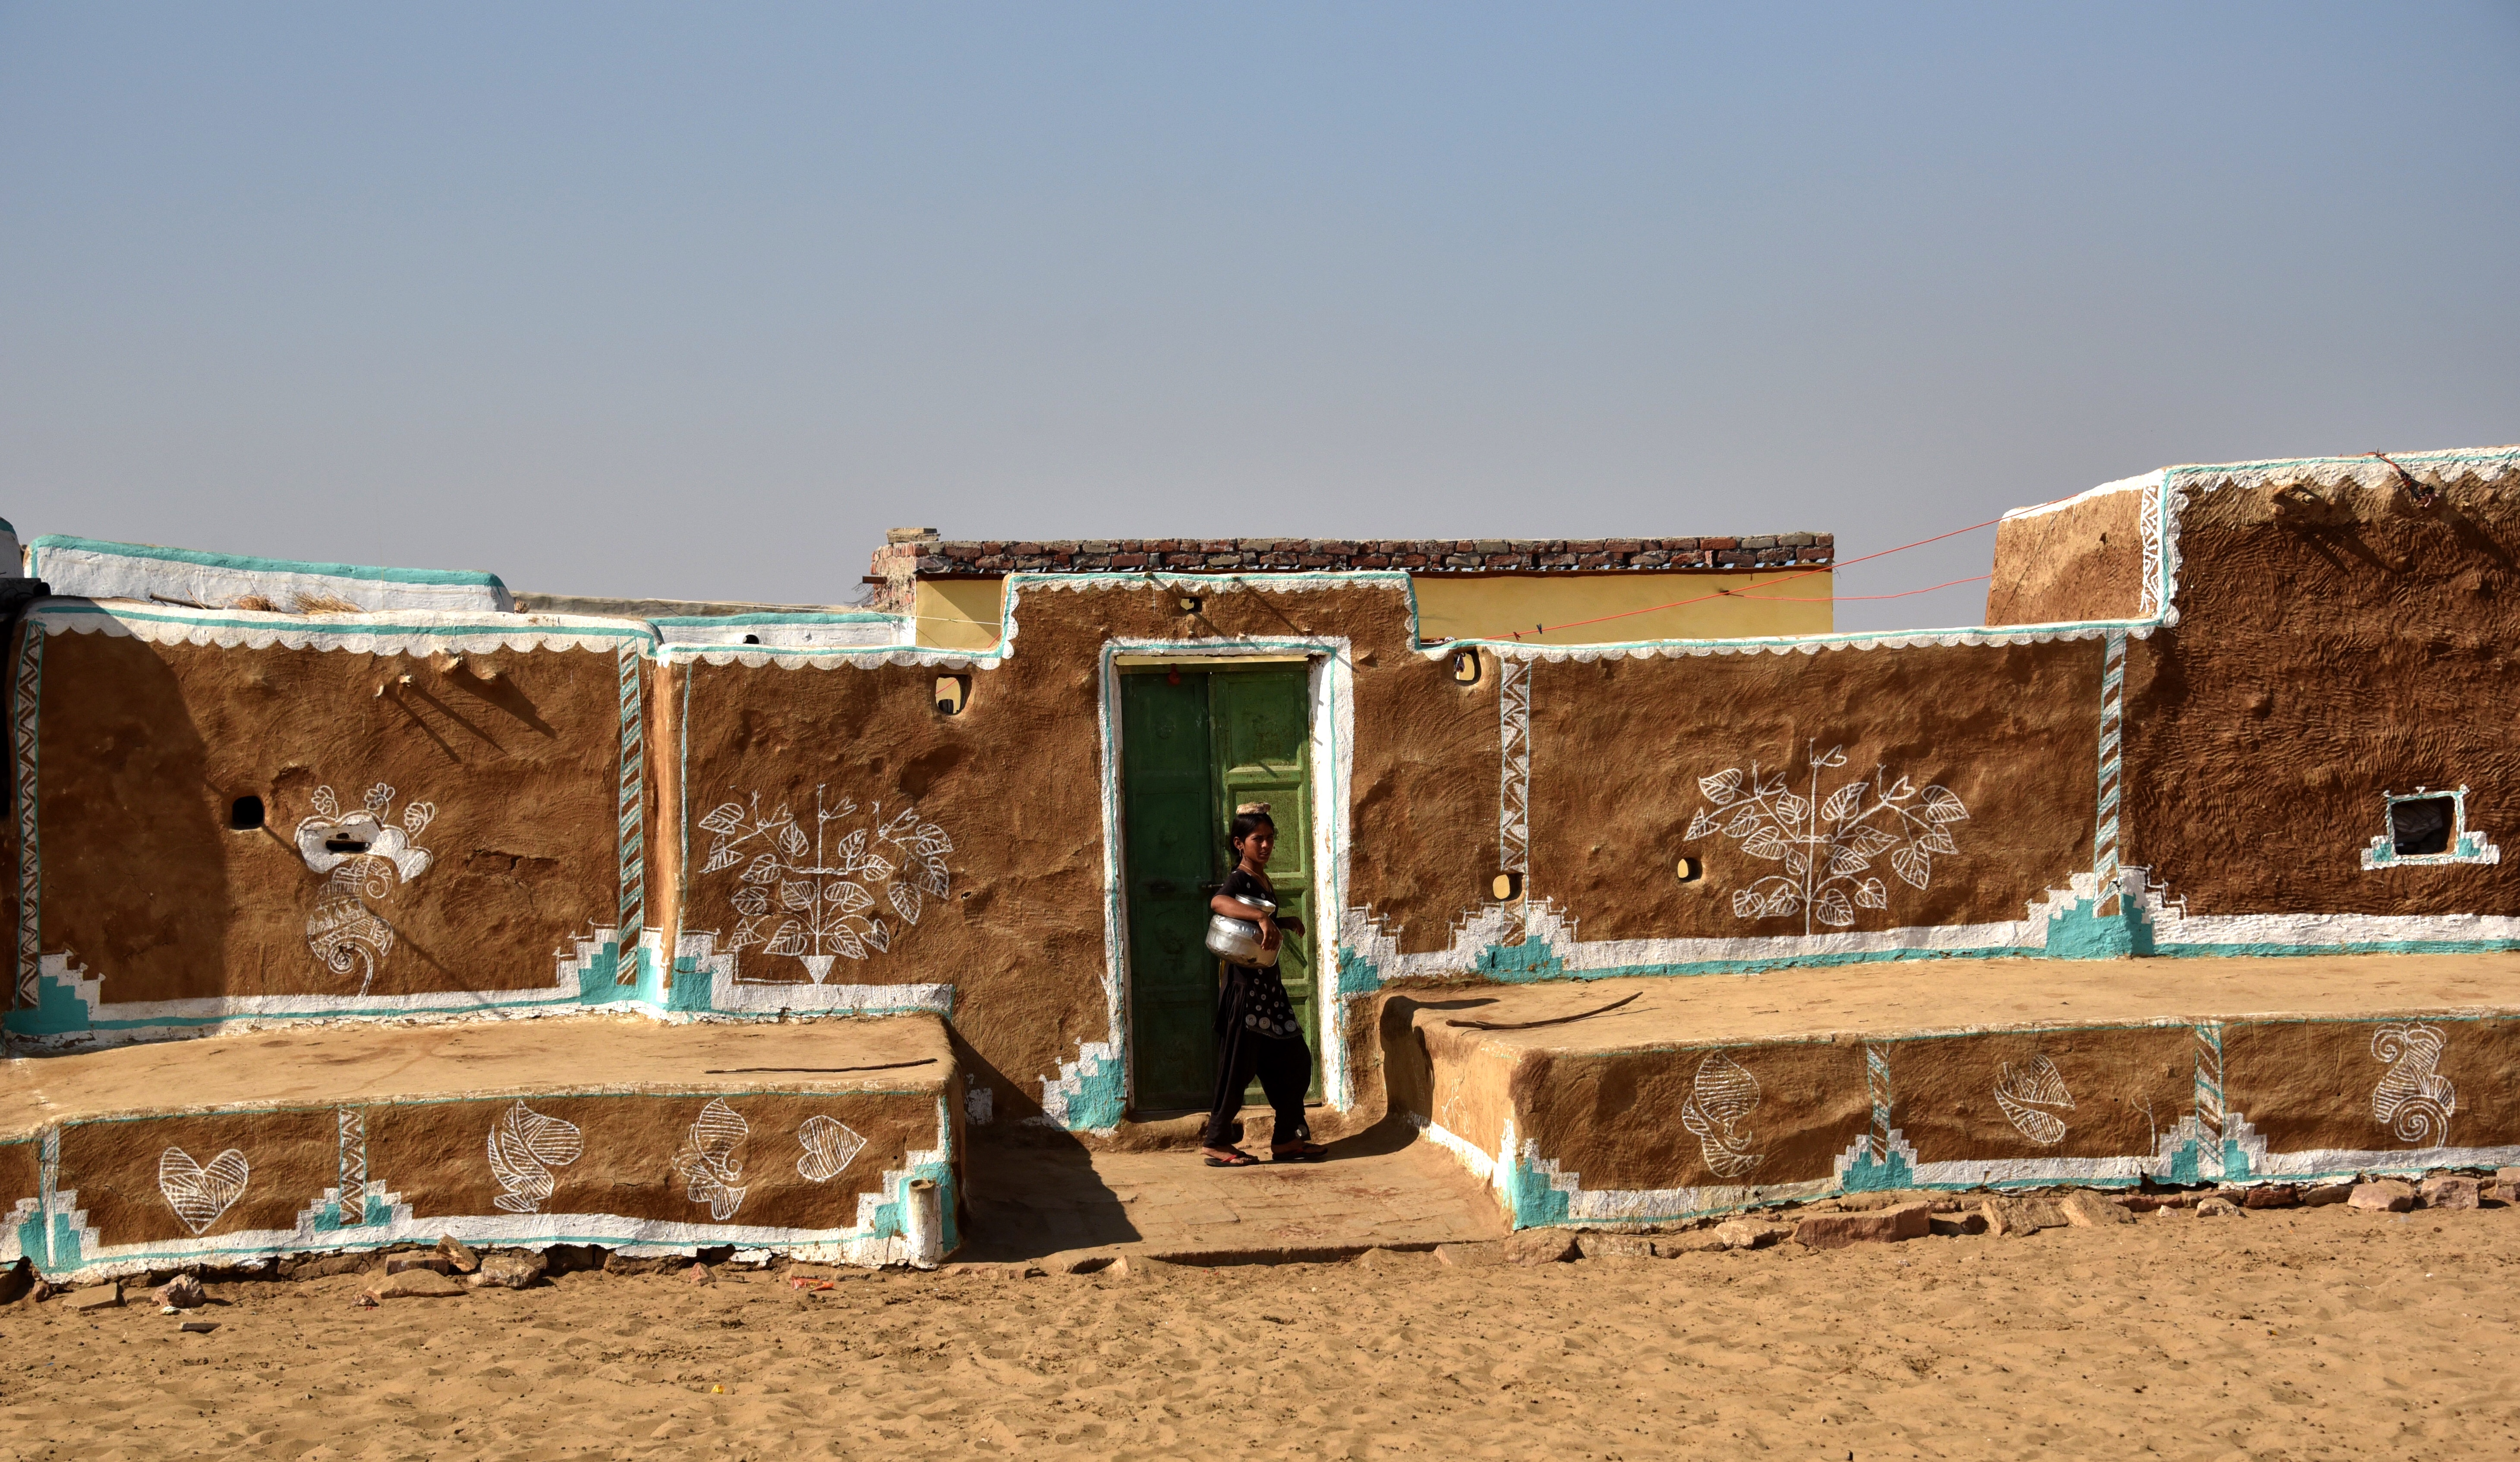 Villages in the Thar Desert - Story at Every Corner